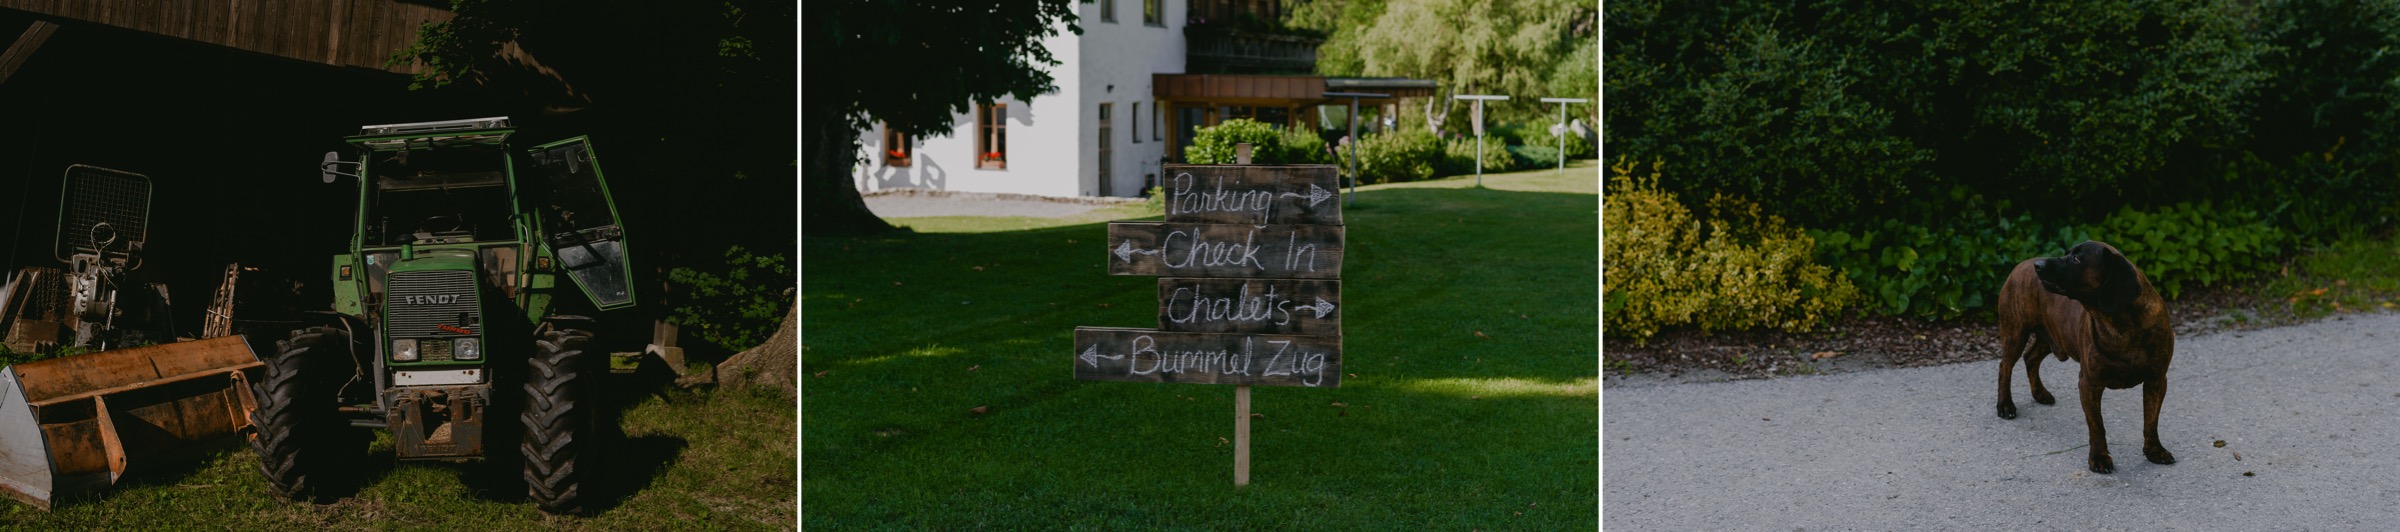 Austria wedding location